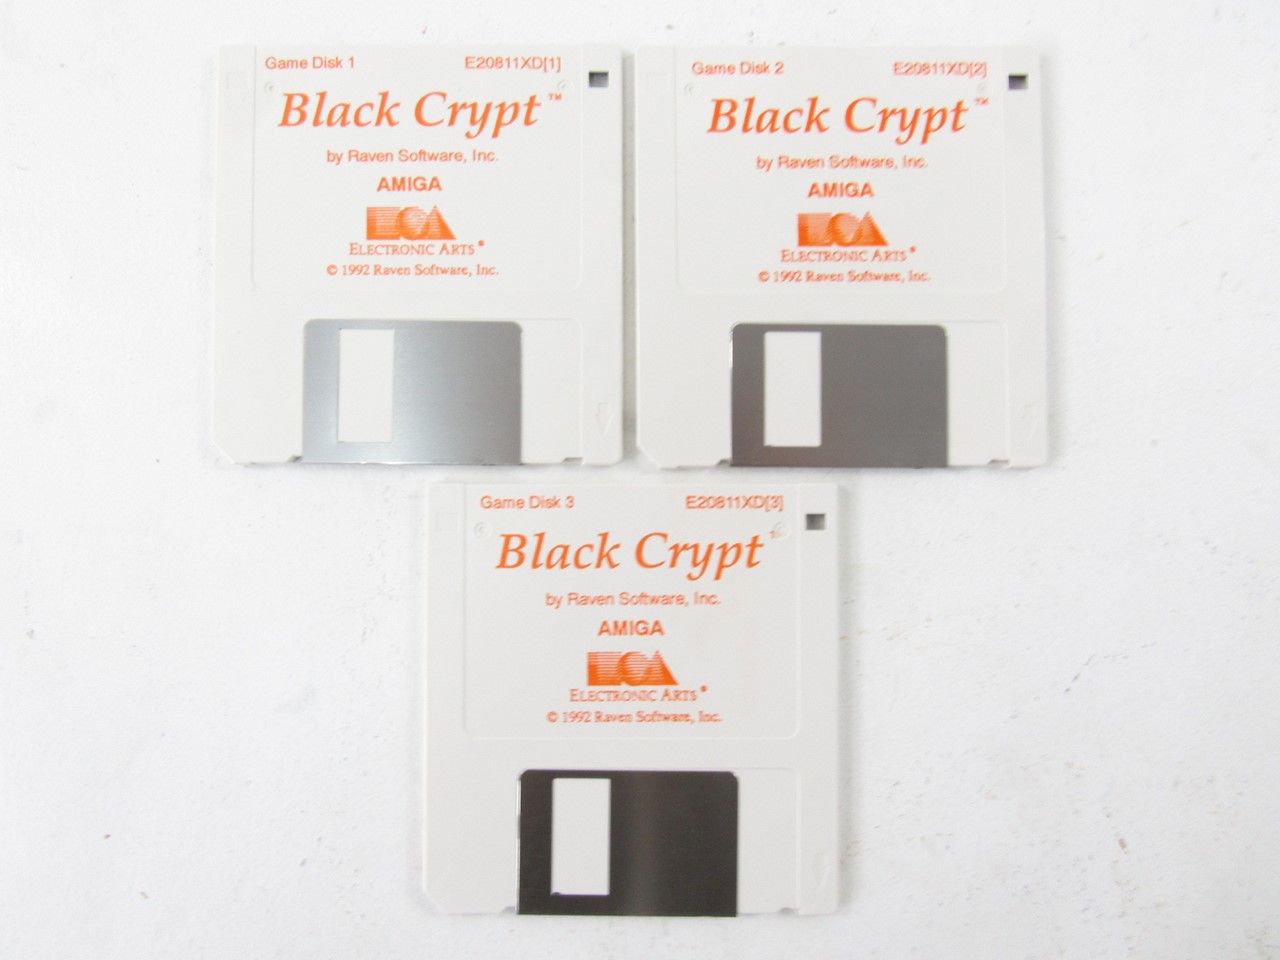 Obraz Amiga Spiel Black Crypt (1992), 512K Disk